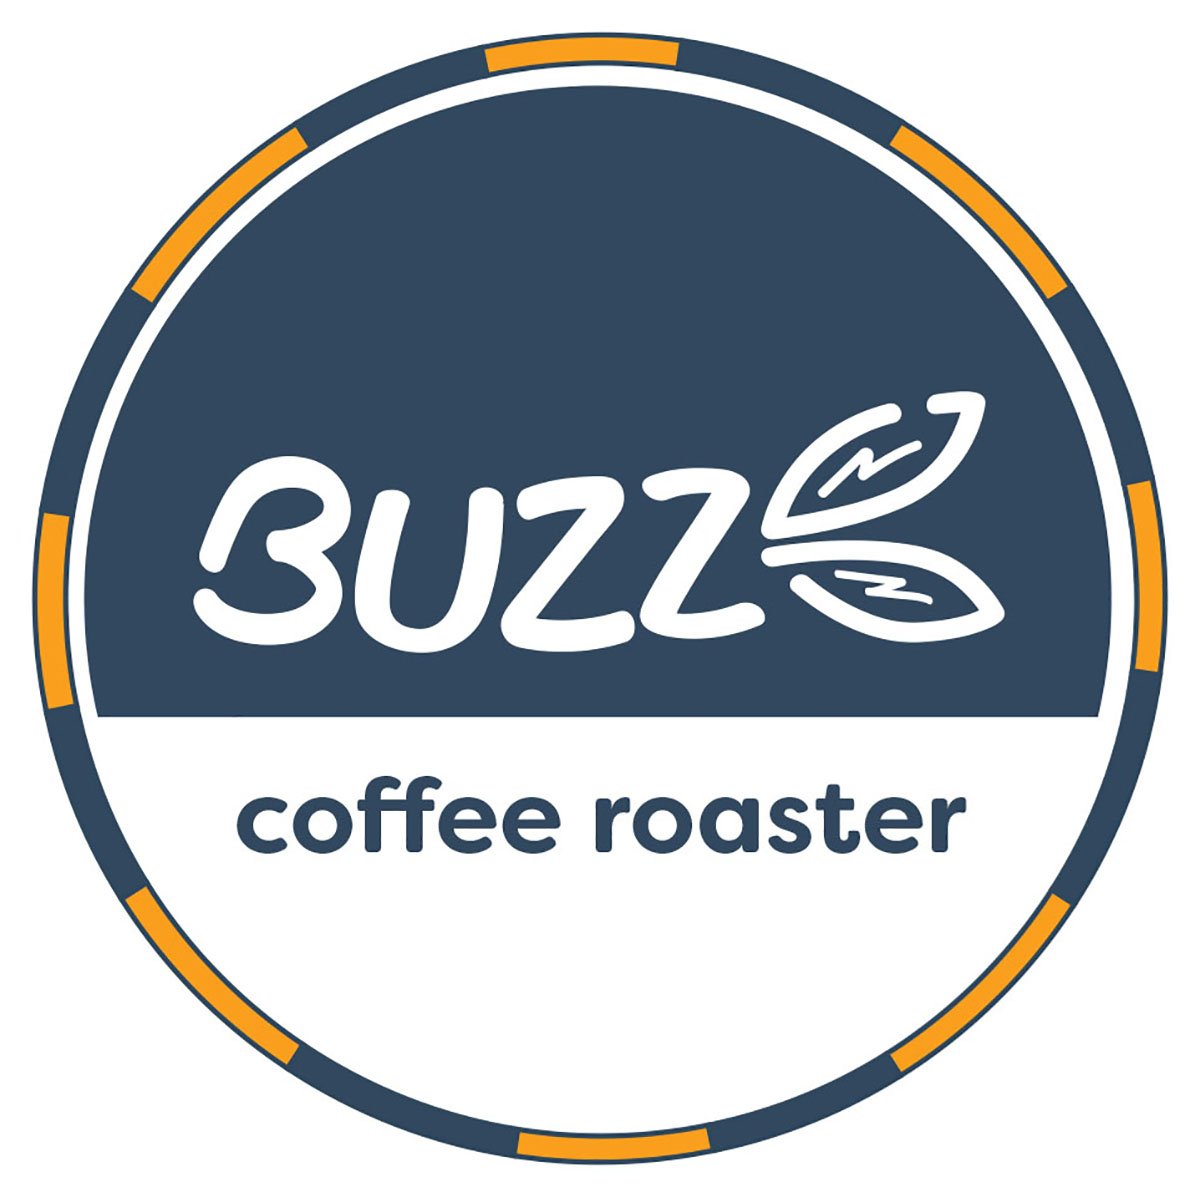 BUZZ COFFEE ROASTER